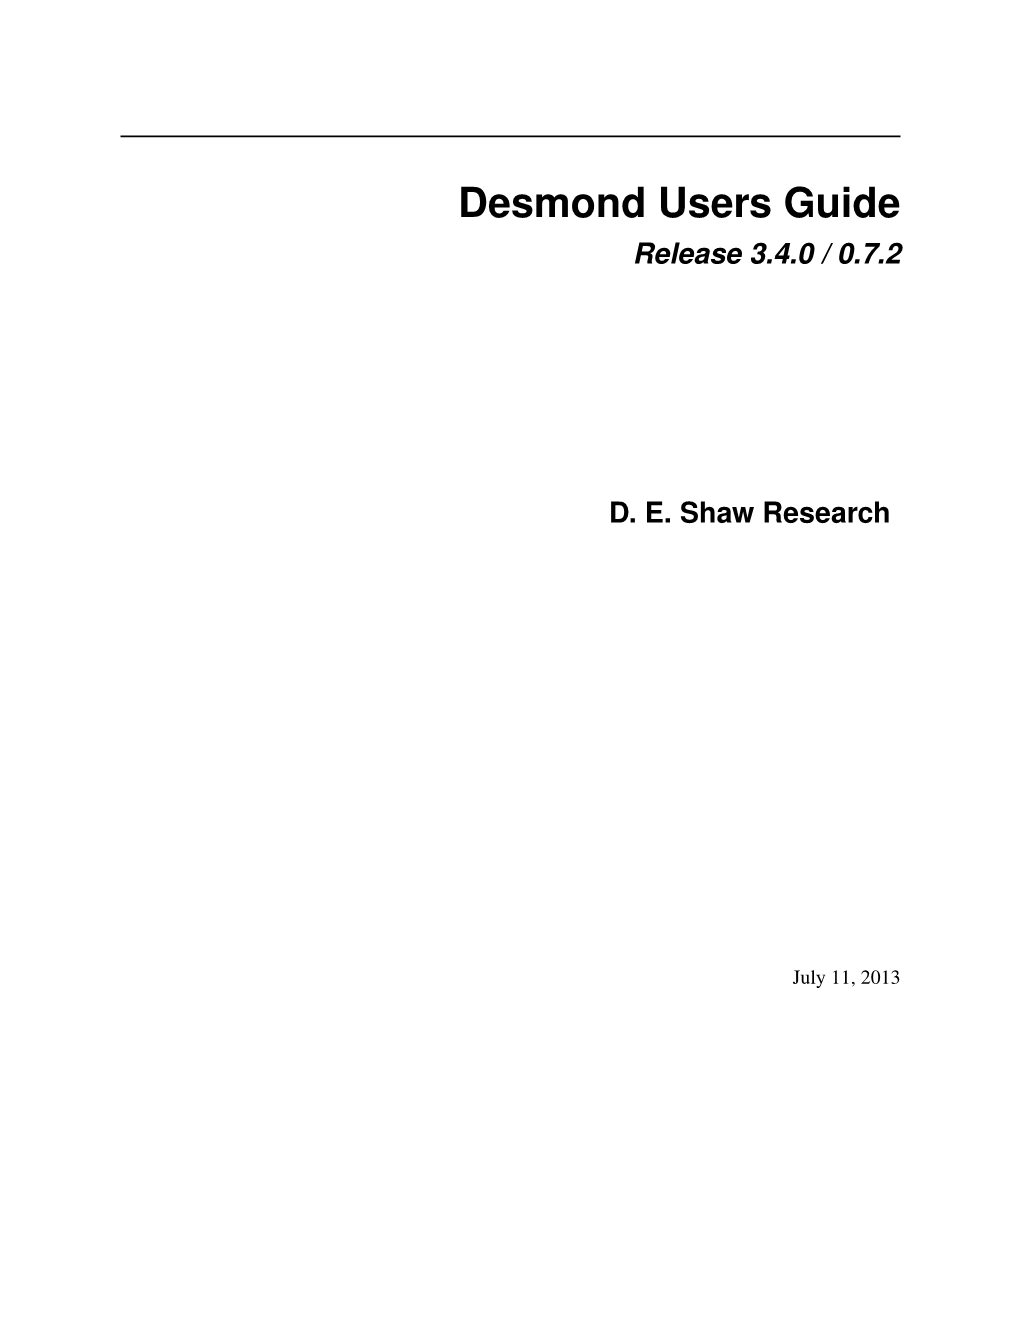 Desmond Users Guide Release 3.4.0 / 0.7.2